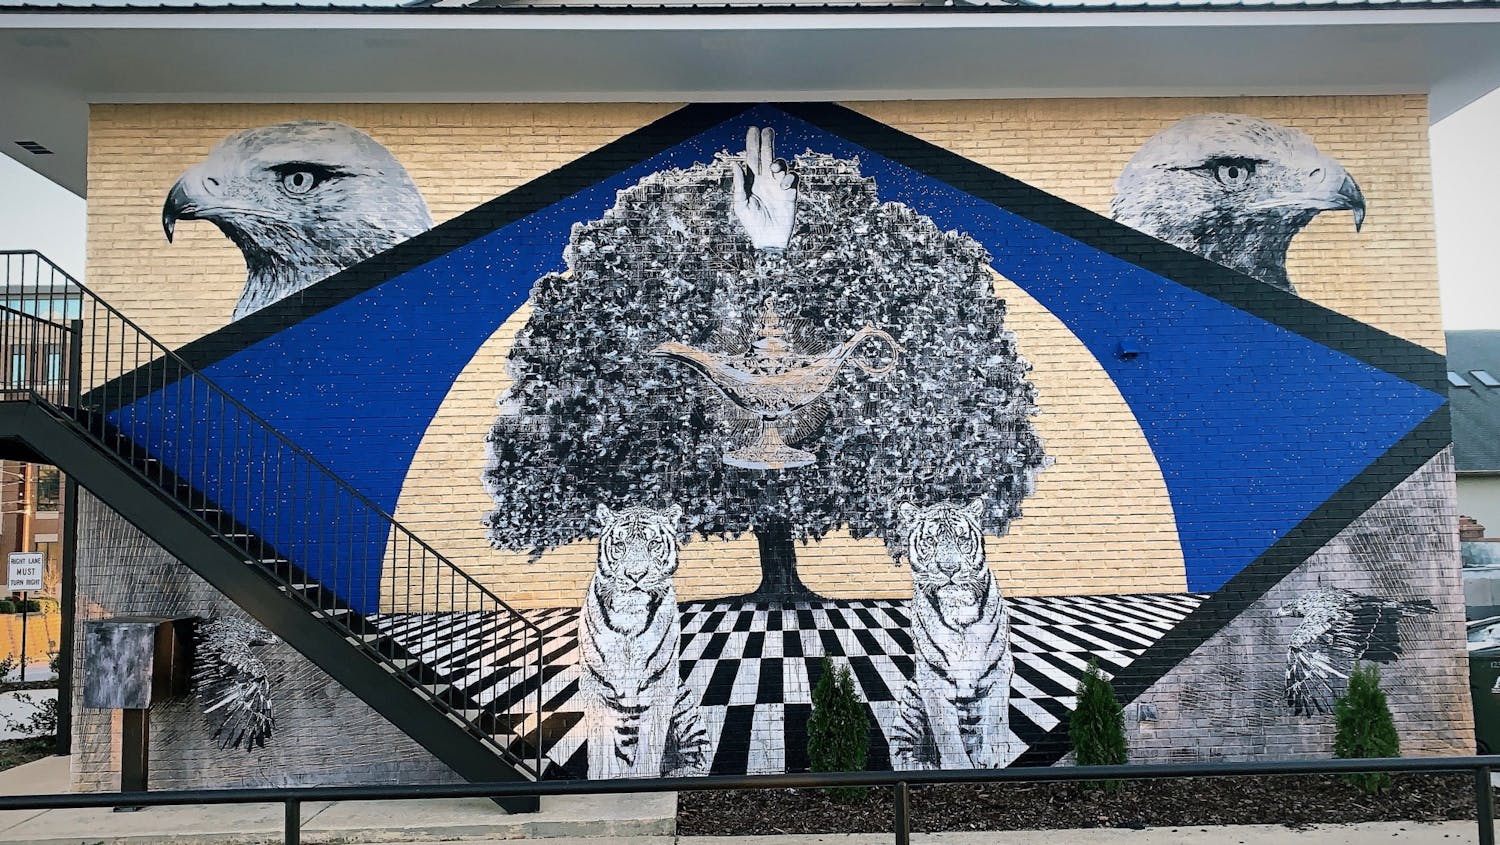 R.C. Hagans mural is located on 123 N. Donahue Drive in Auburn, Ala.&nbsp;